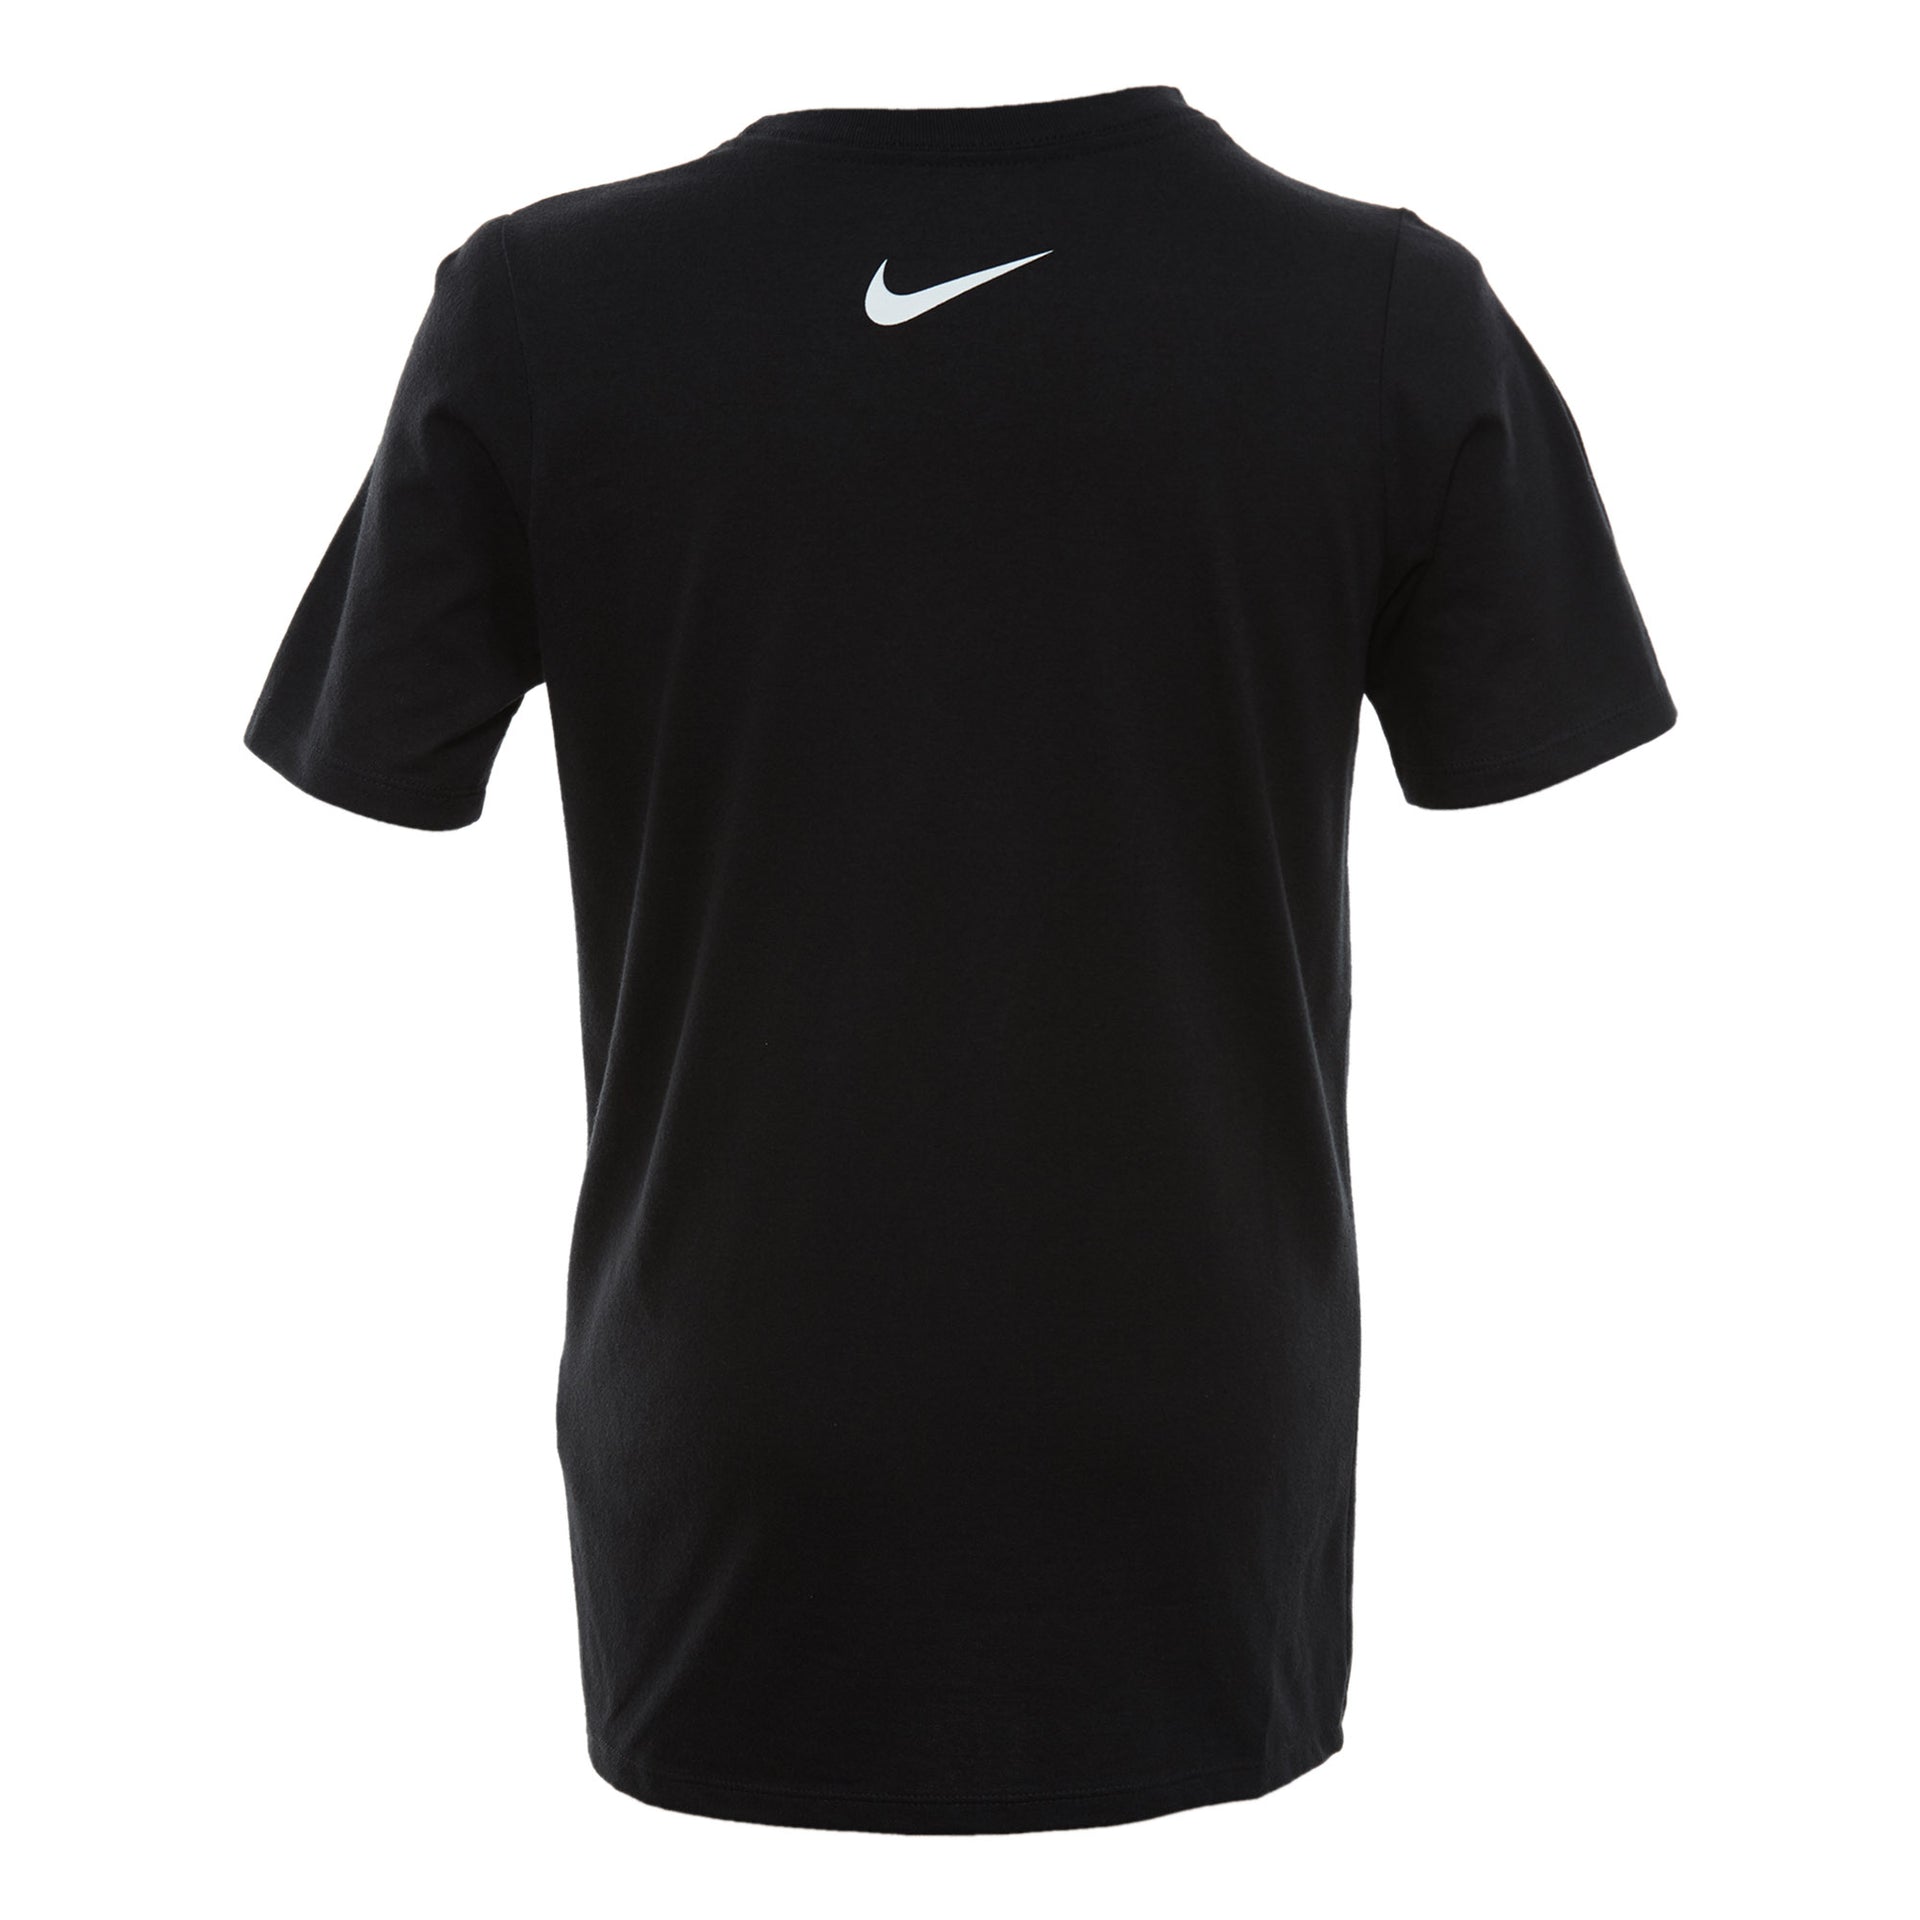 Nike Dri-fit Training T-shirt Big Kids Style : 923674-010